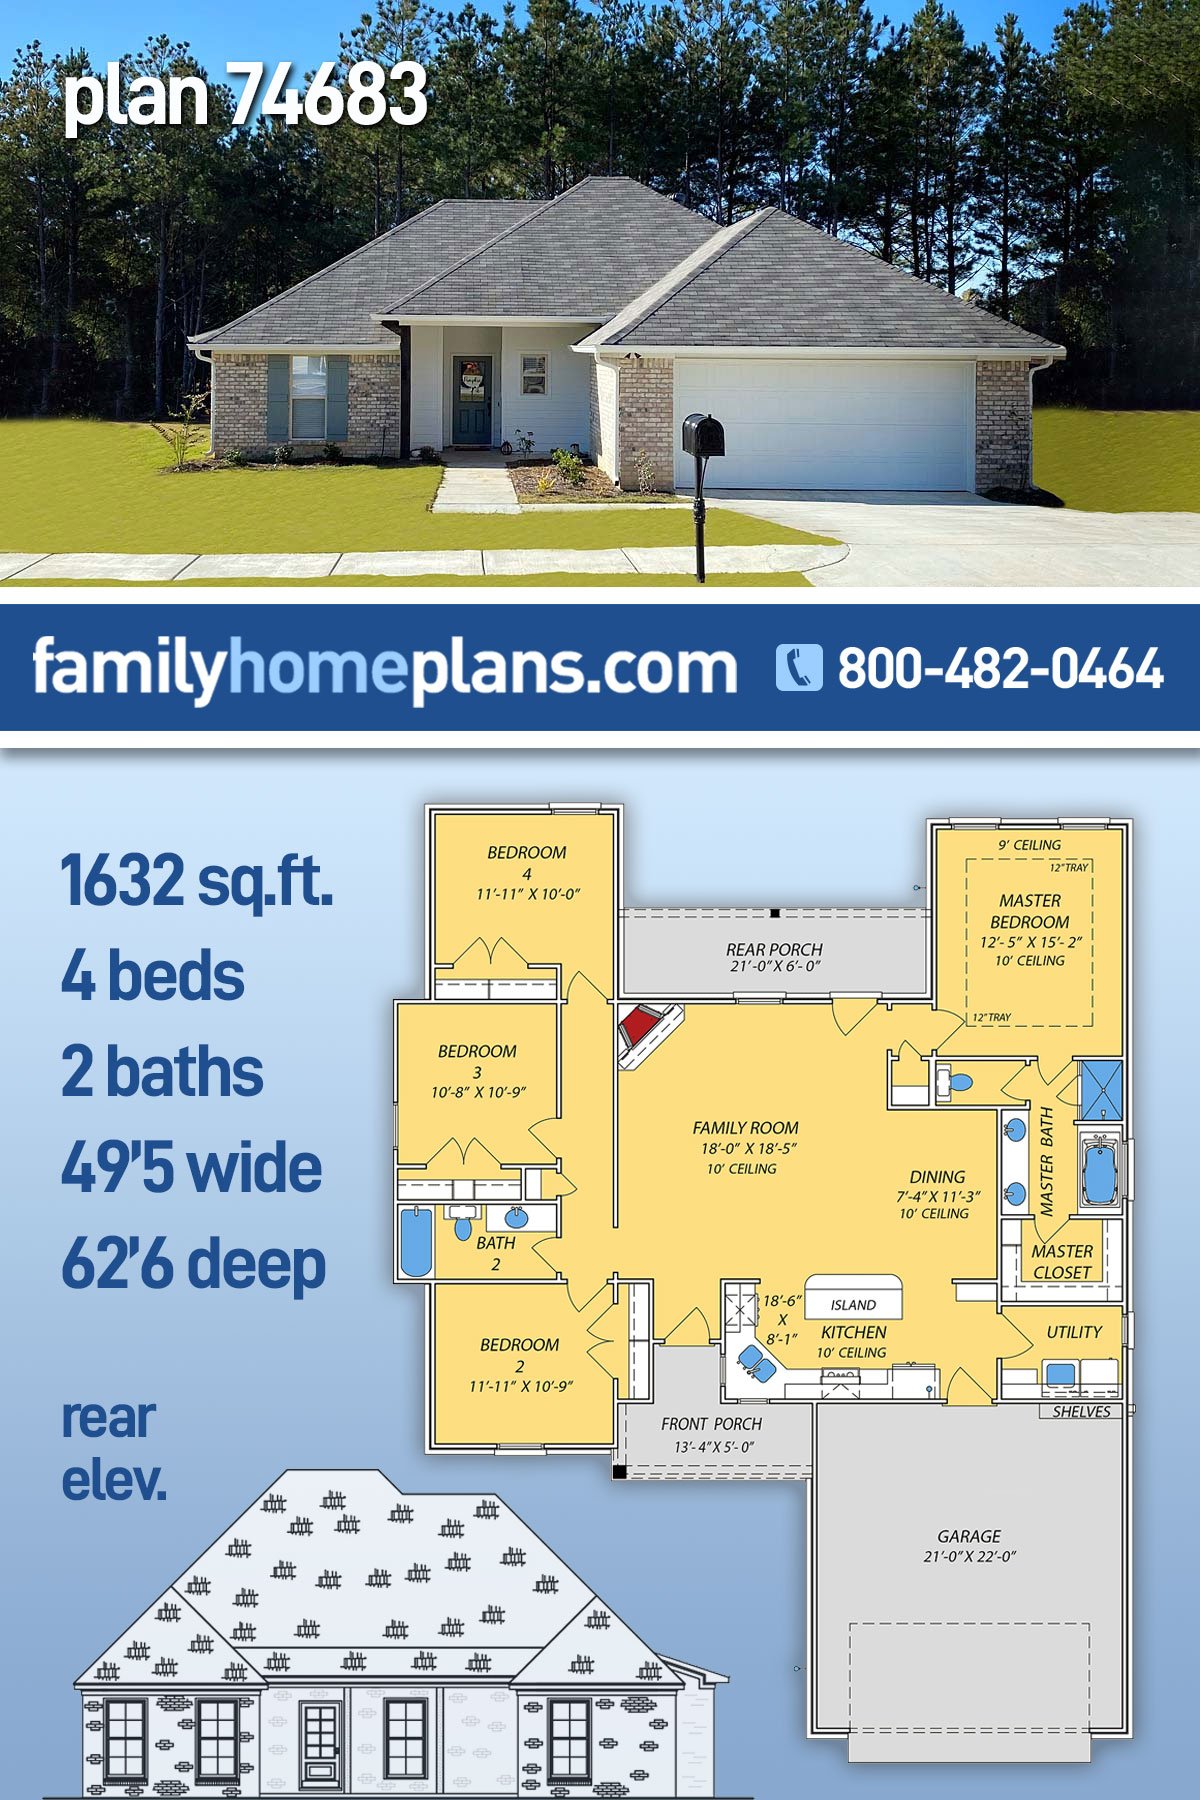 House Plan 74683